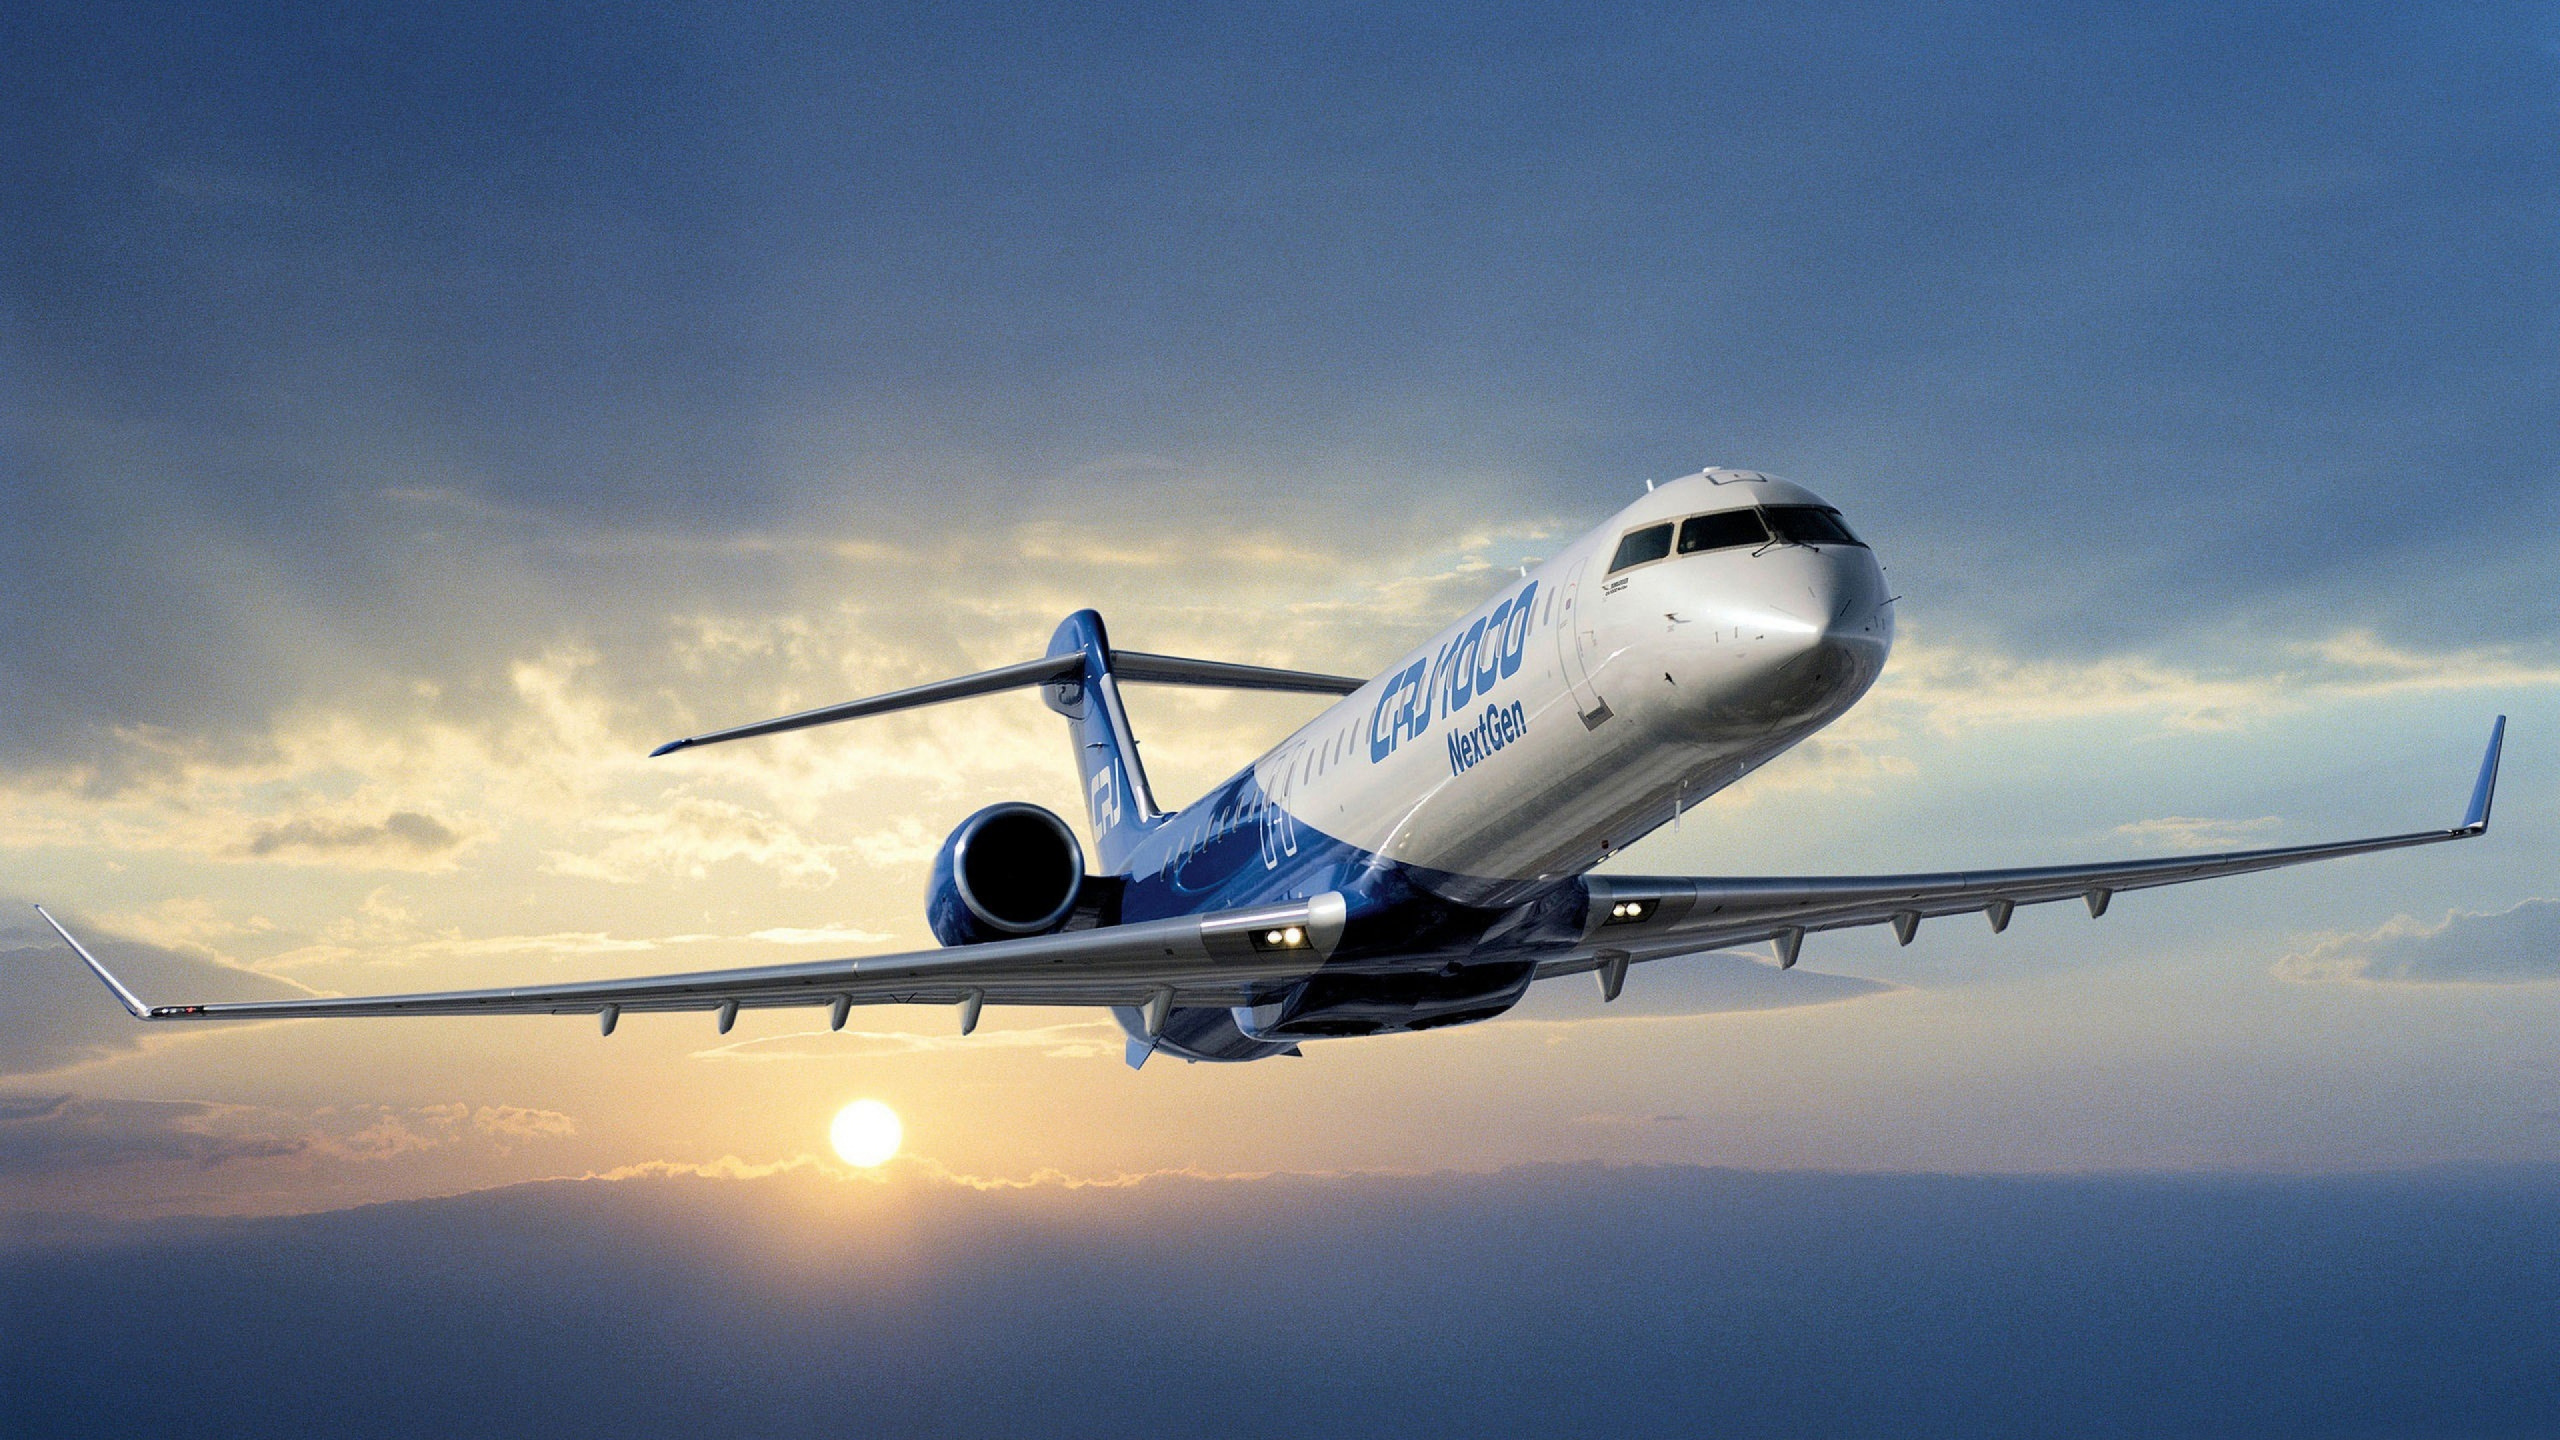 White and Blue Passenger Plane in Flight. Wallpaper in 2560x1440 Resolution